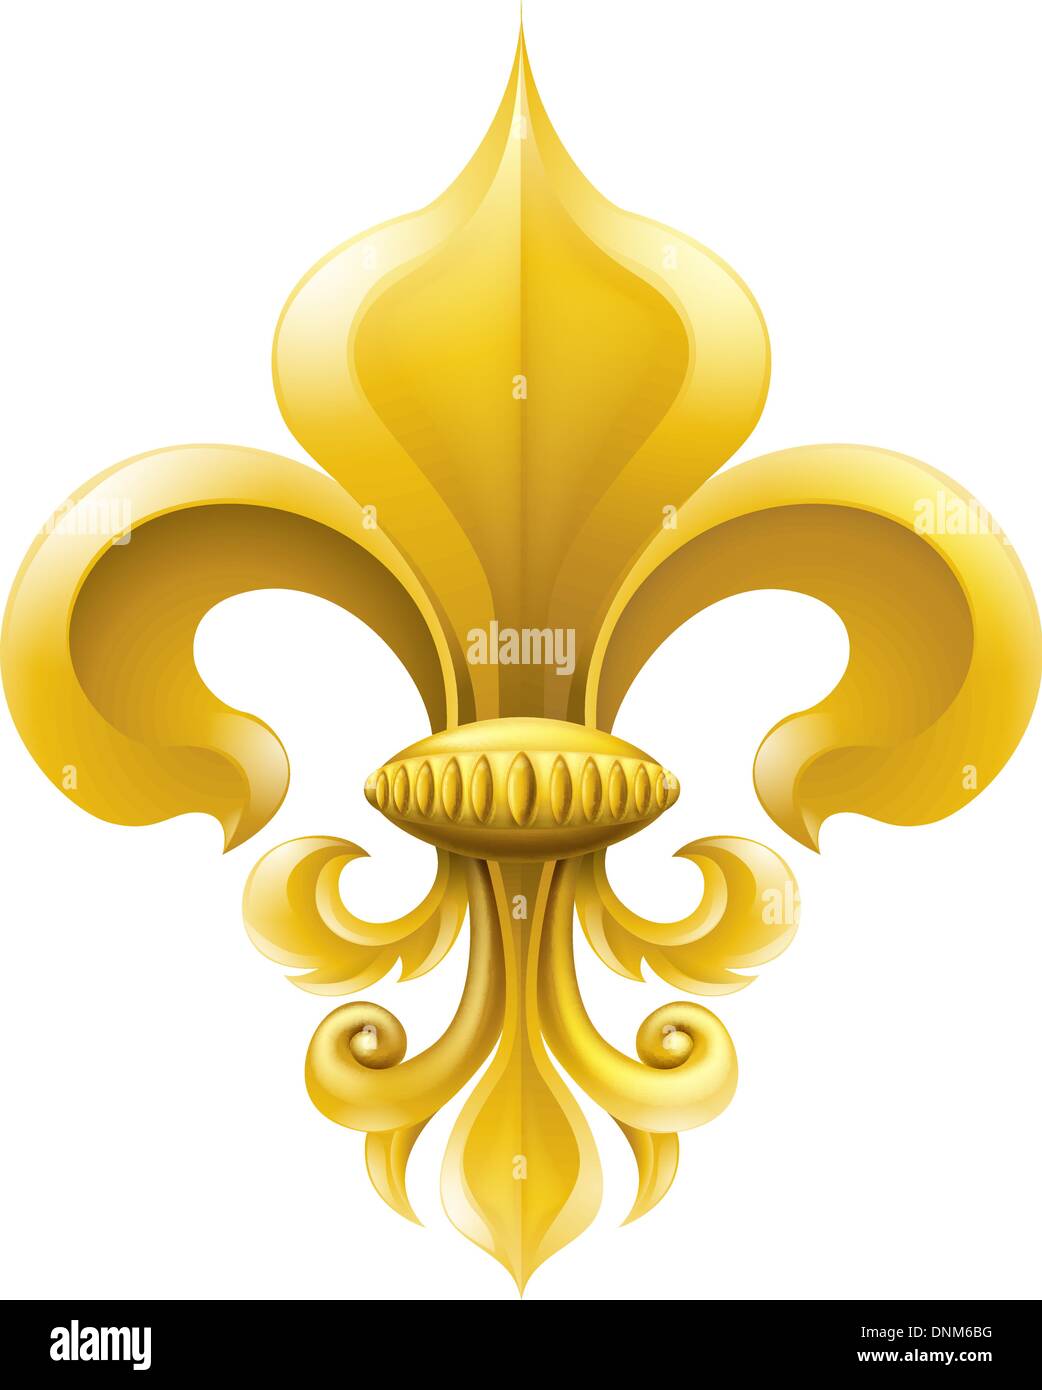 Golden fleur-de-lis decorative design or heraldic symbol. Stock Vector